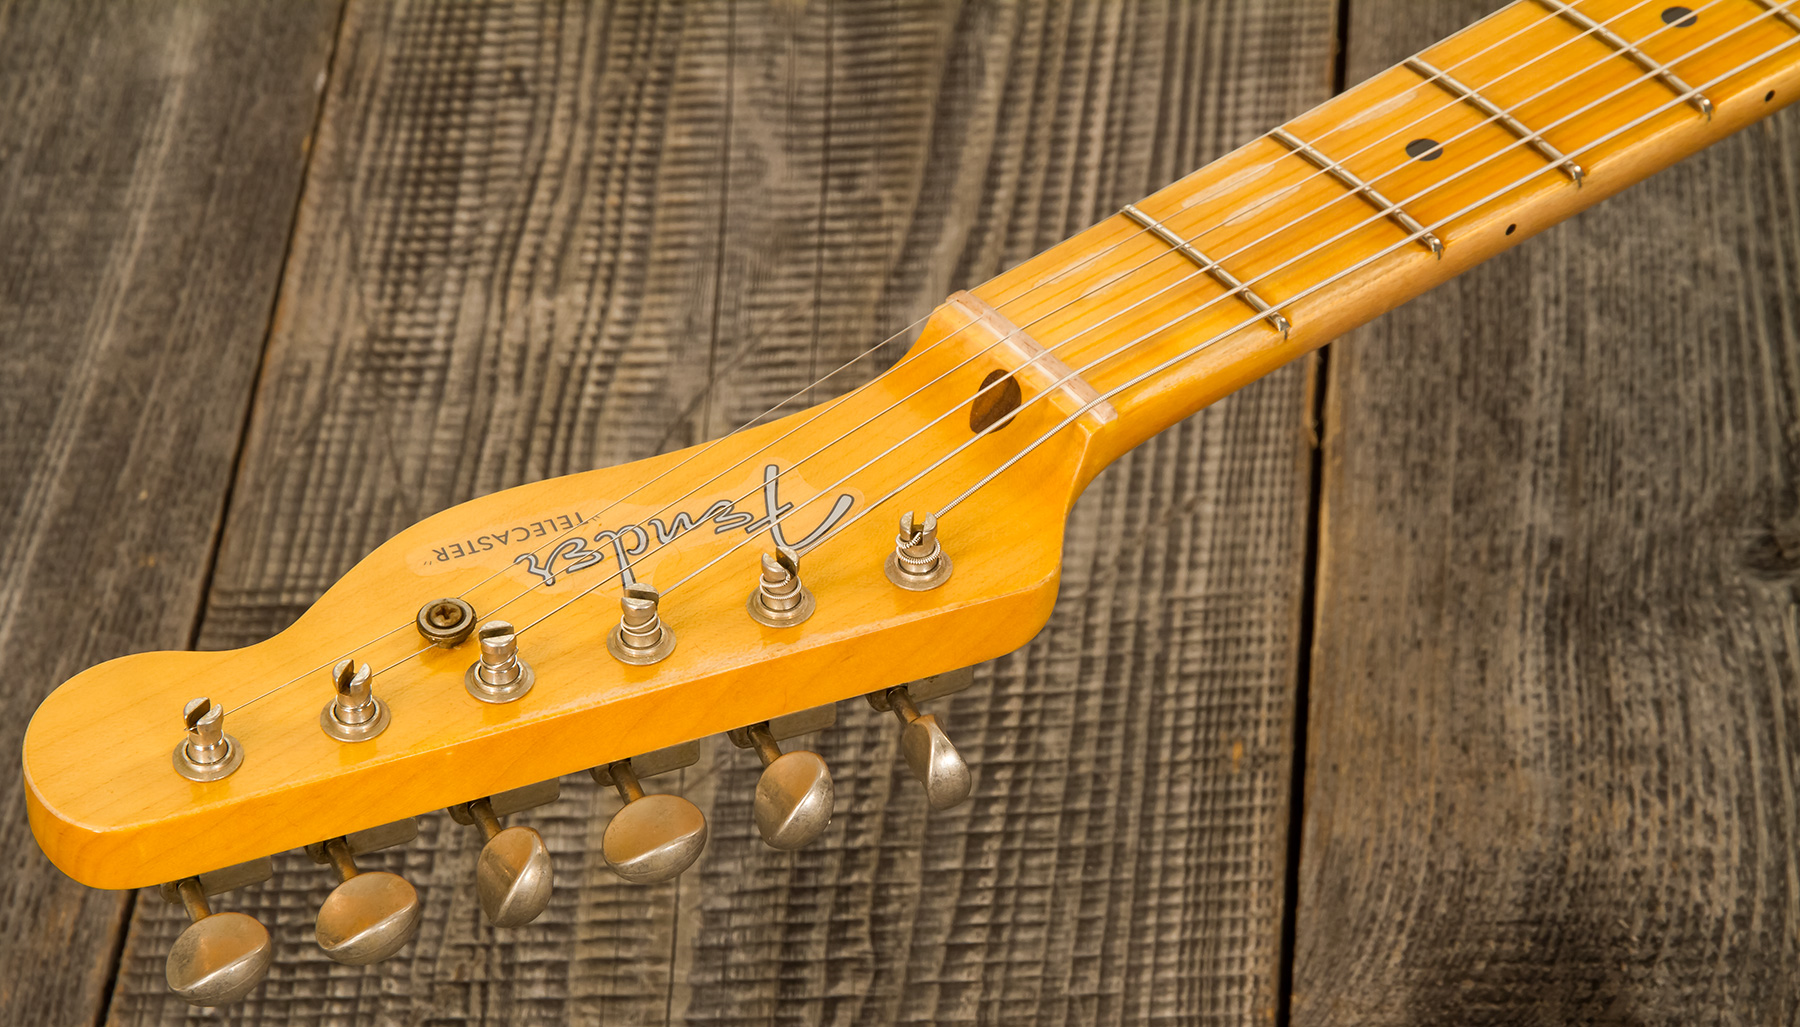 Fender Custom Shop Tele 1955 Ltd 2s Ht Mn #cz560649 - Relic Wide Fade 2-color Sunburst - Tel shape electric guitar - Variation 8